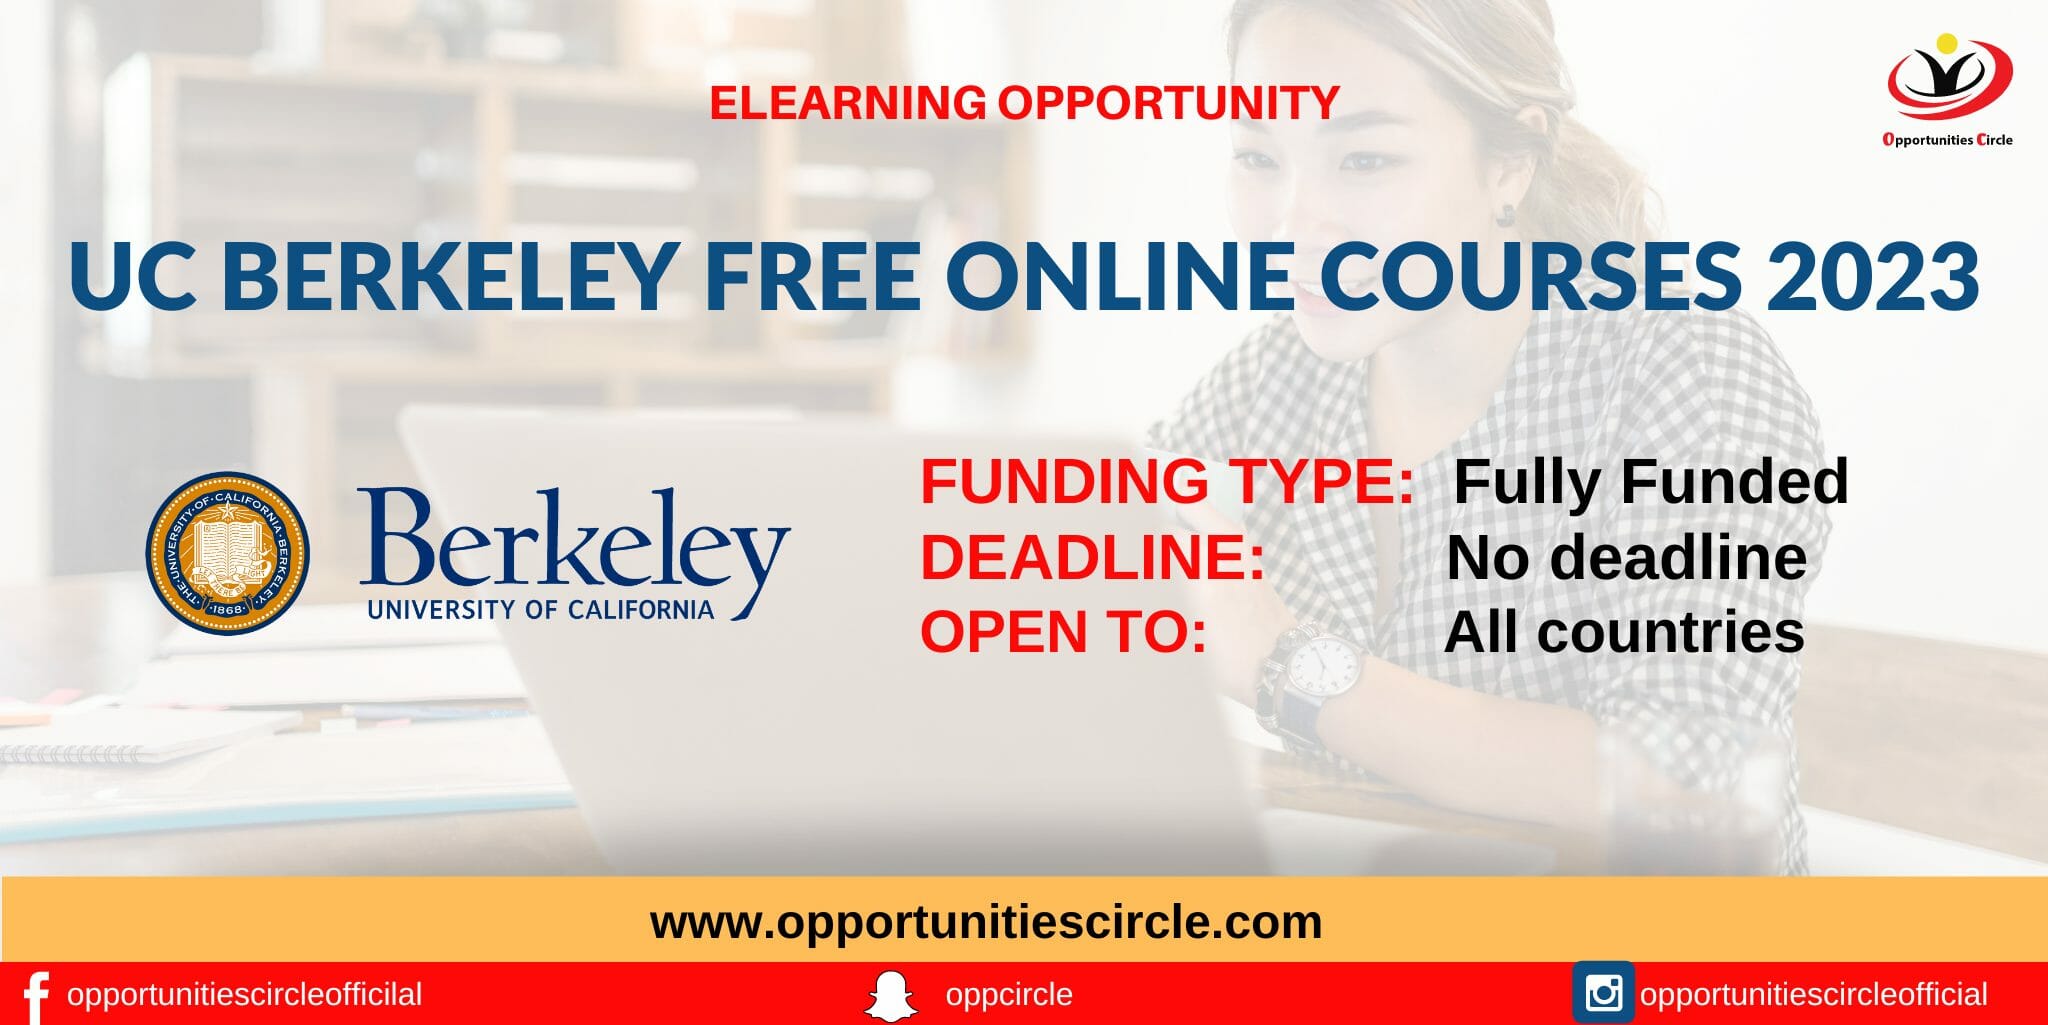 UC Berkeley Free Online Courses 2023 Opportunities Circle